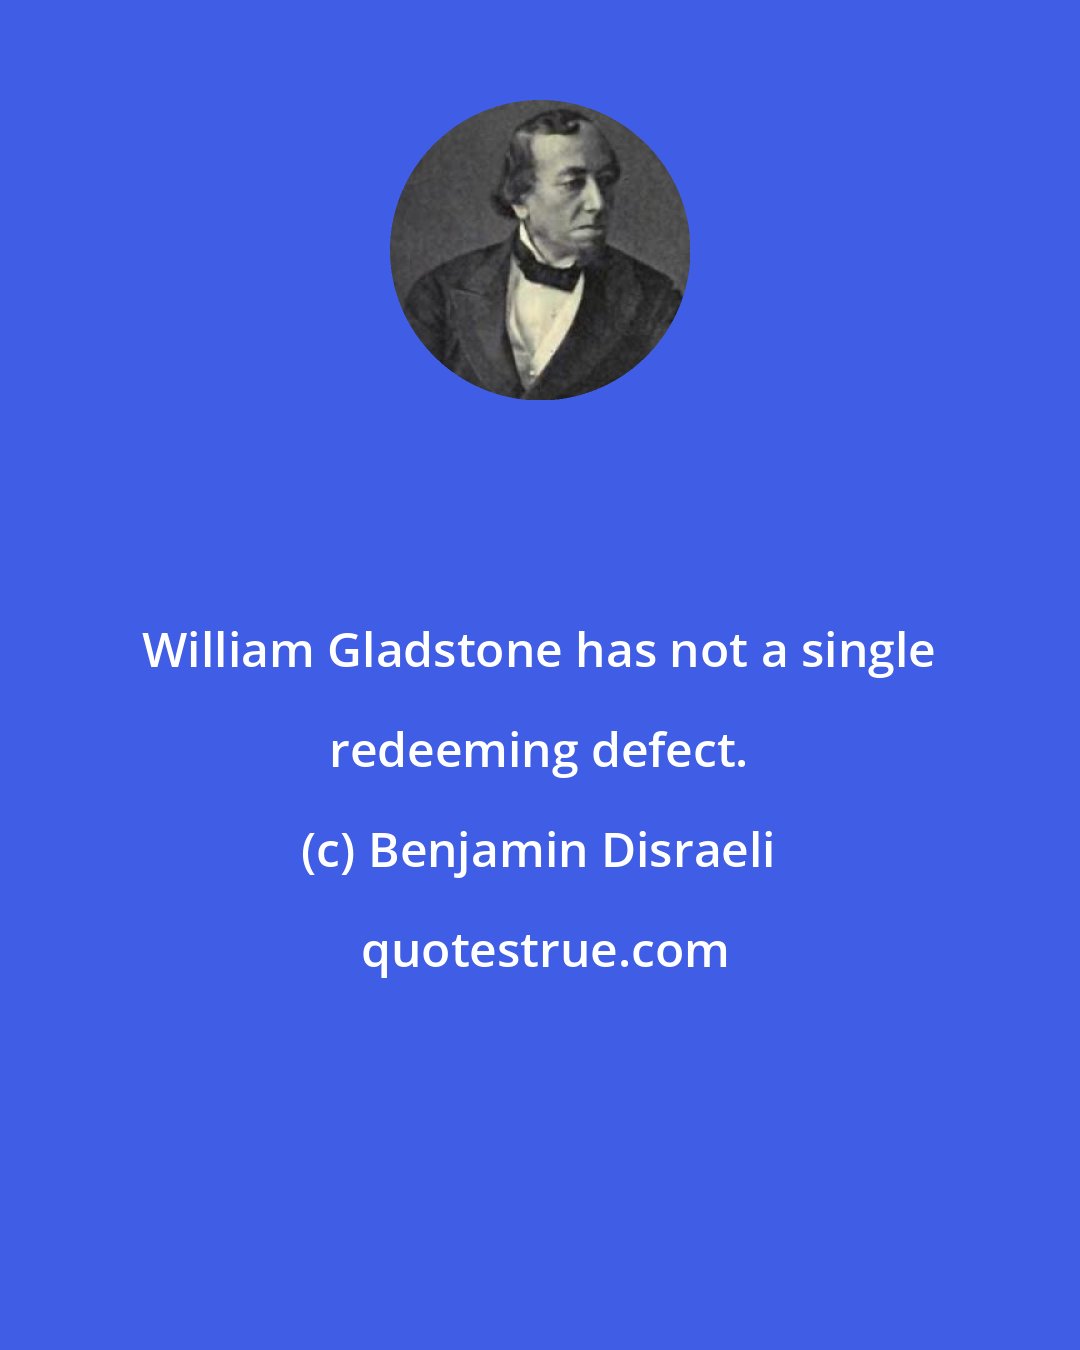 Benjamin Disraeli: William Gladstone has not a single redeeming defect.